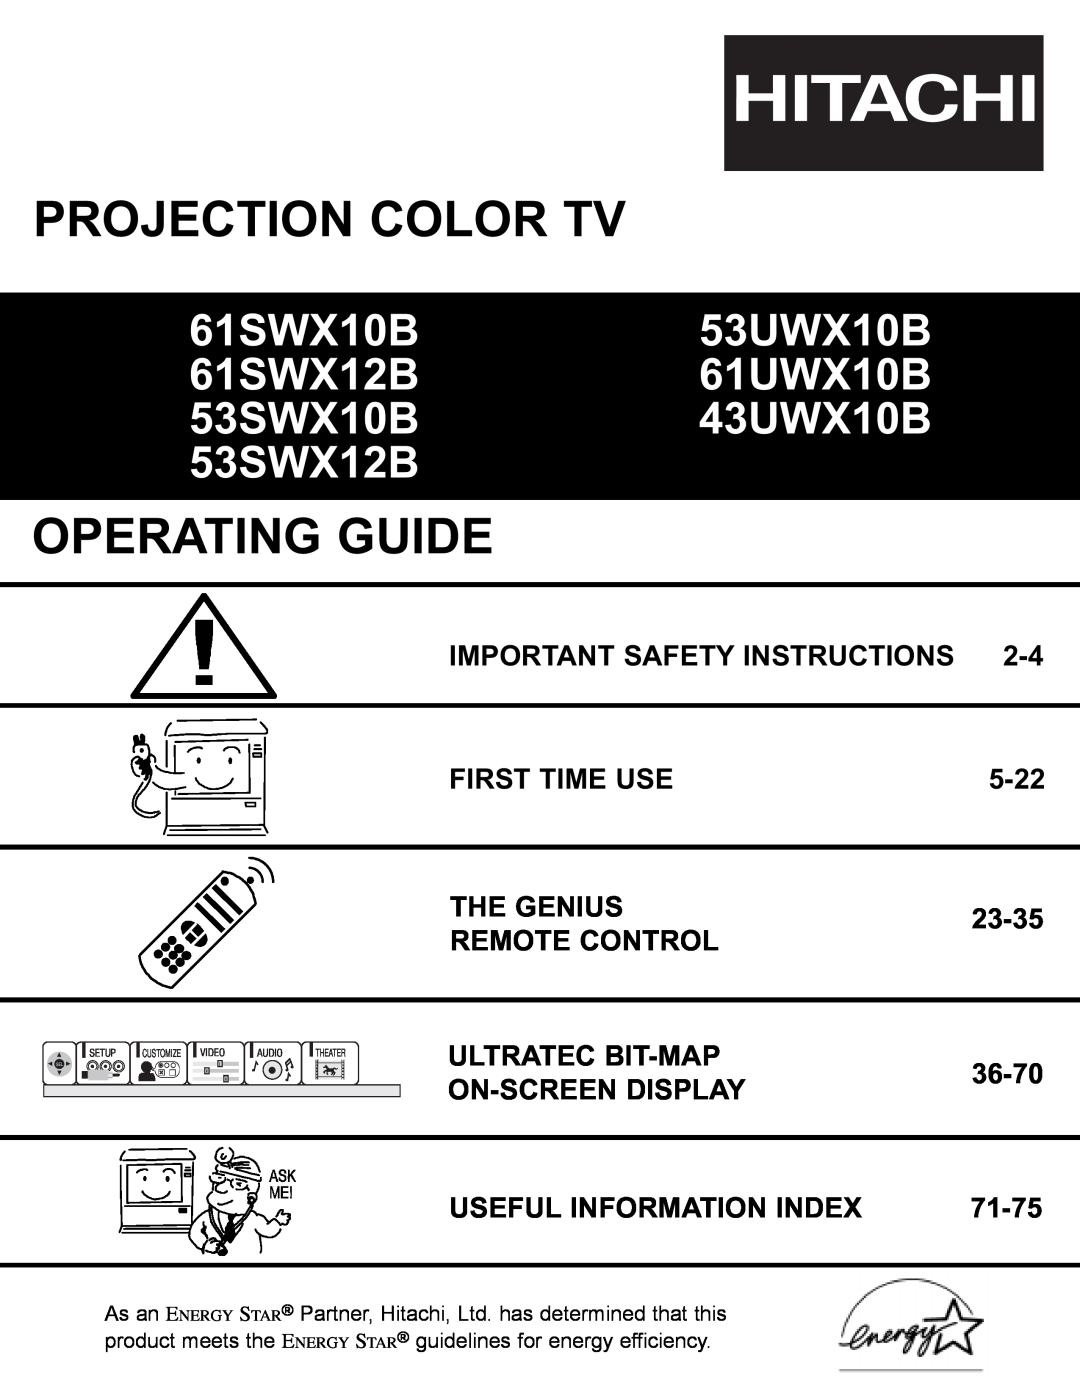 Hitachi 61UWX10B important safety instructions Important Safety Instructions, First Time Use, 5-22, The Genius, 23-35 